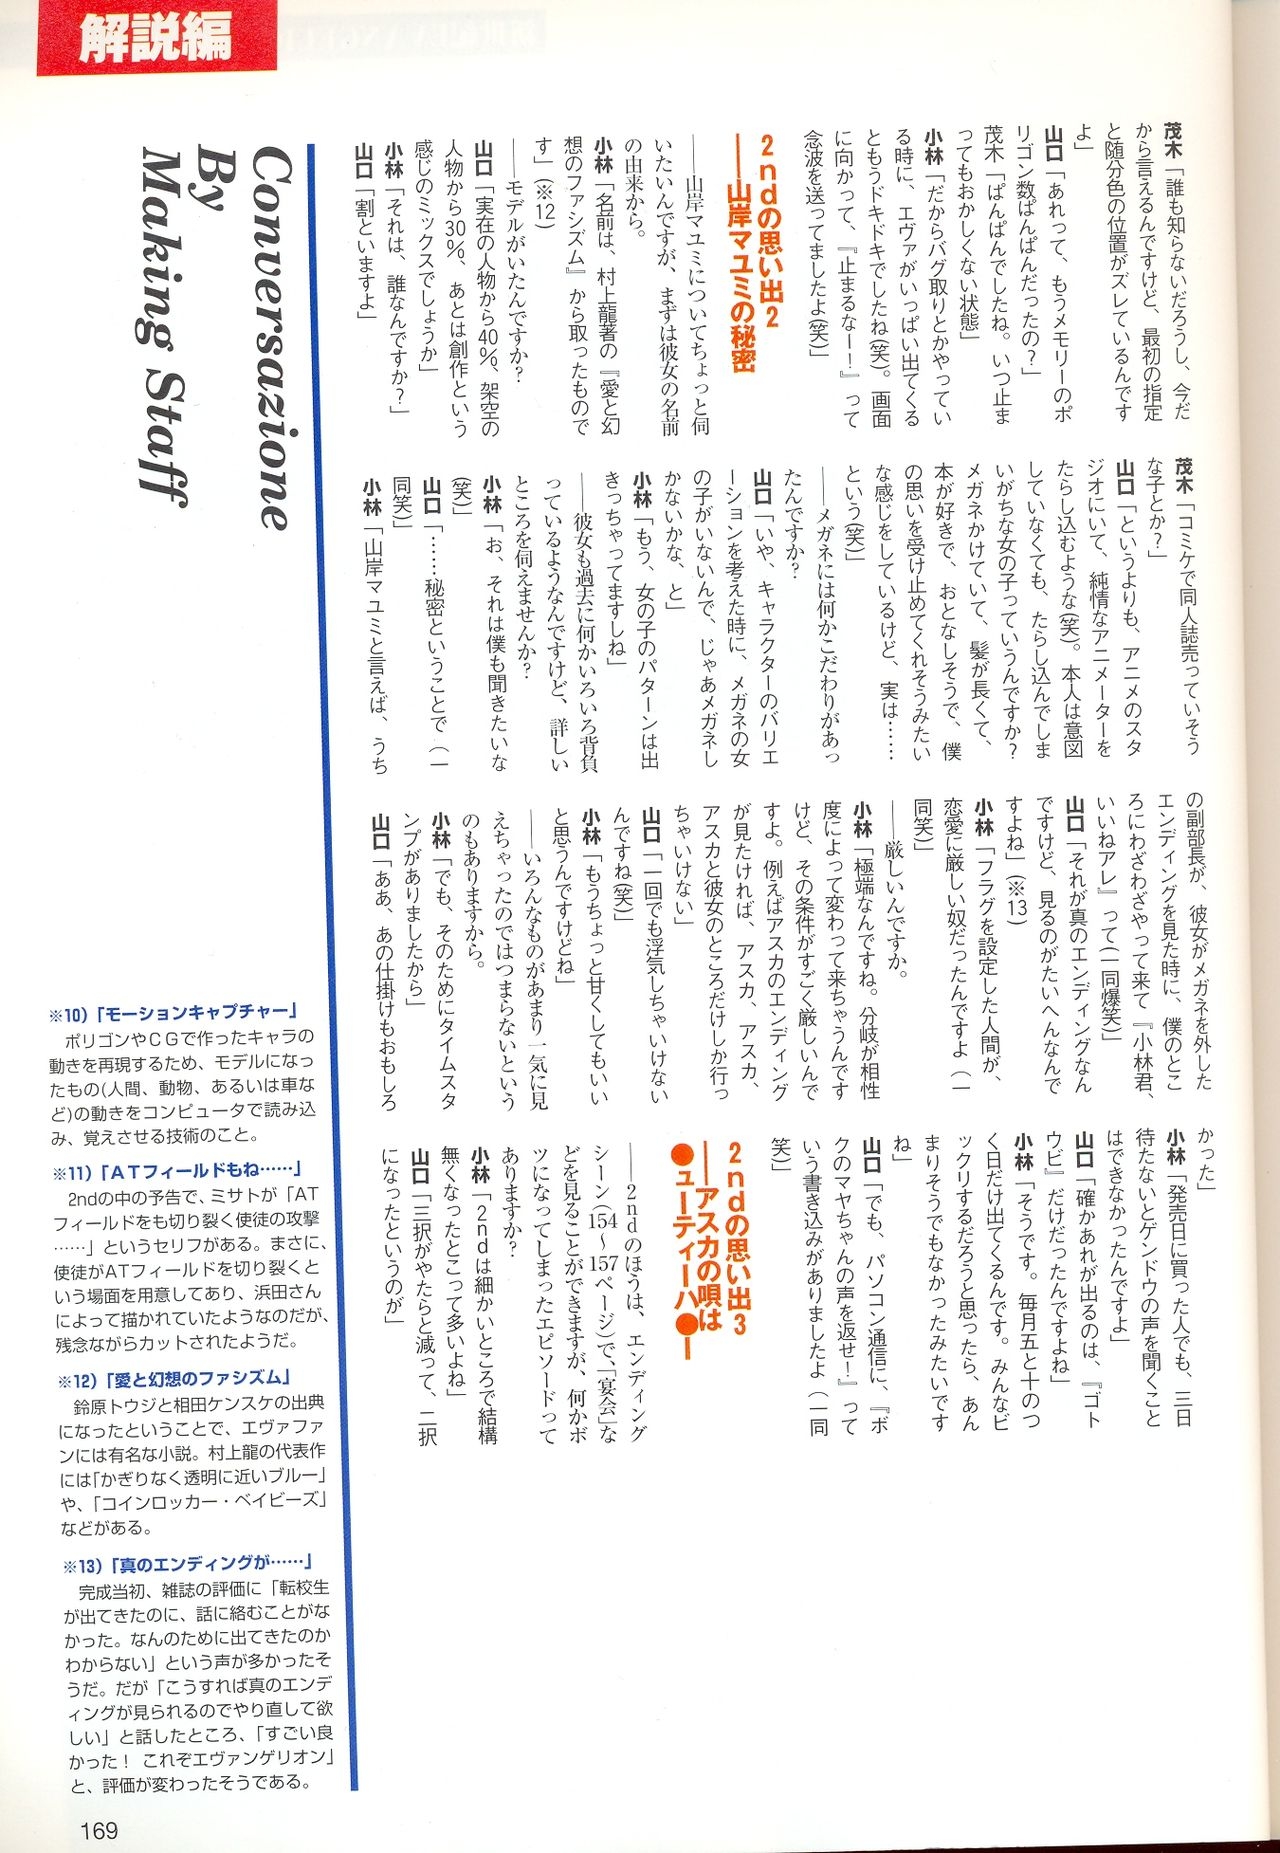 Neon Genesis Evangelion - 2nd Impression Sega Saturn Perfect Guide 168